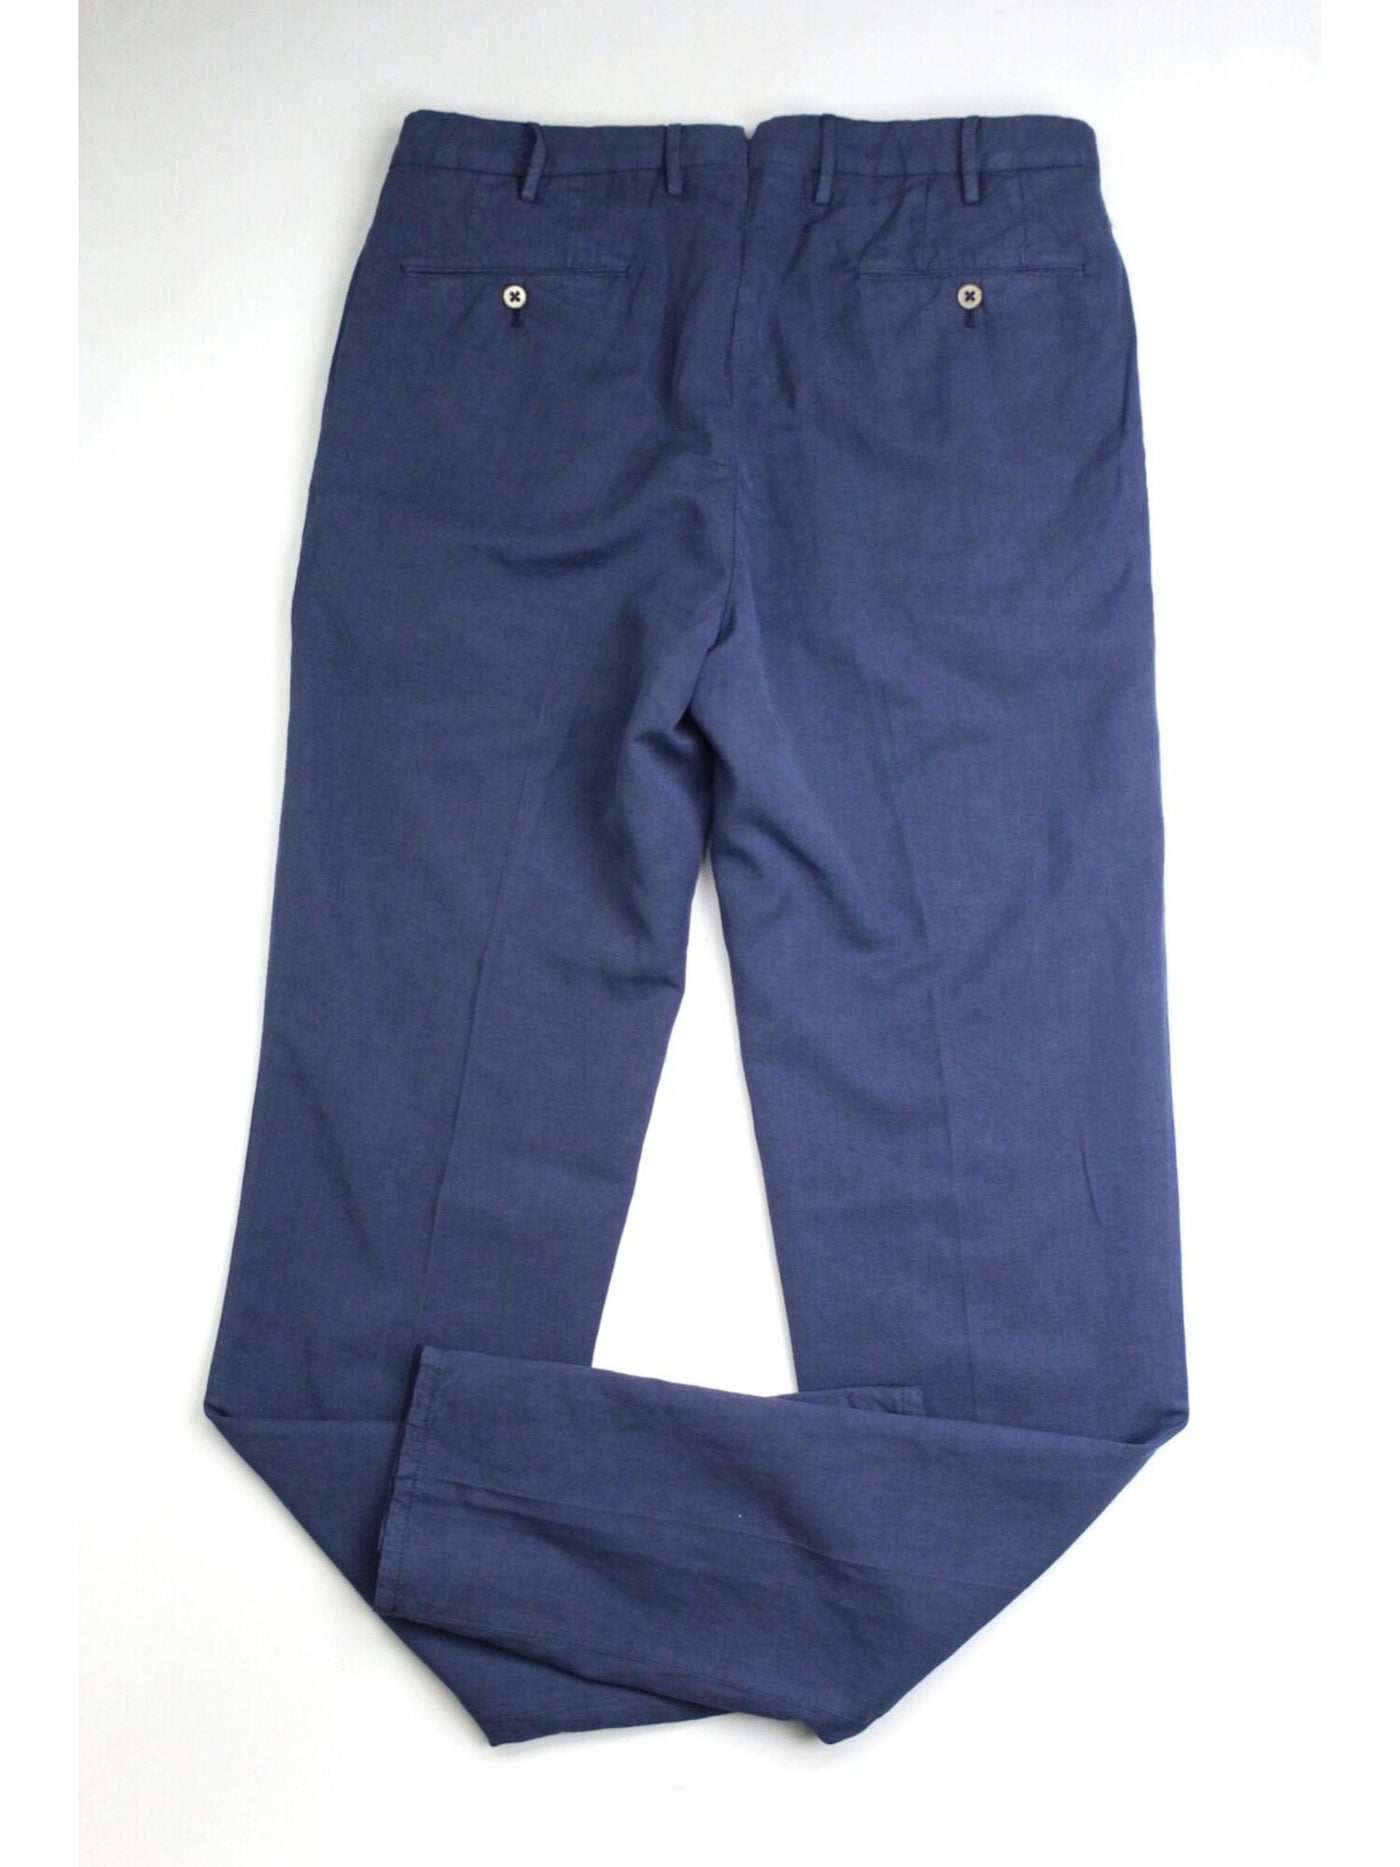 TORIN OPIFICIO Mens Blue Straight Leg, Classic Fit Cashmere Chino Pants 48